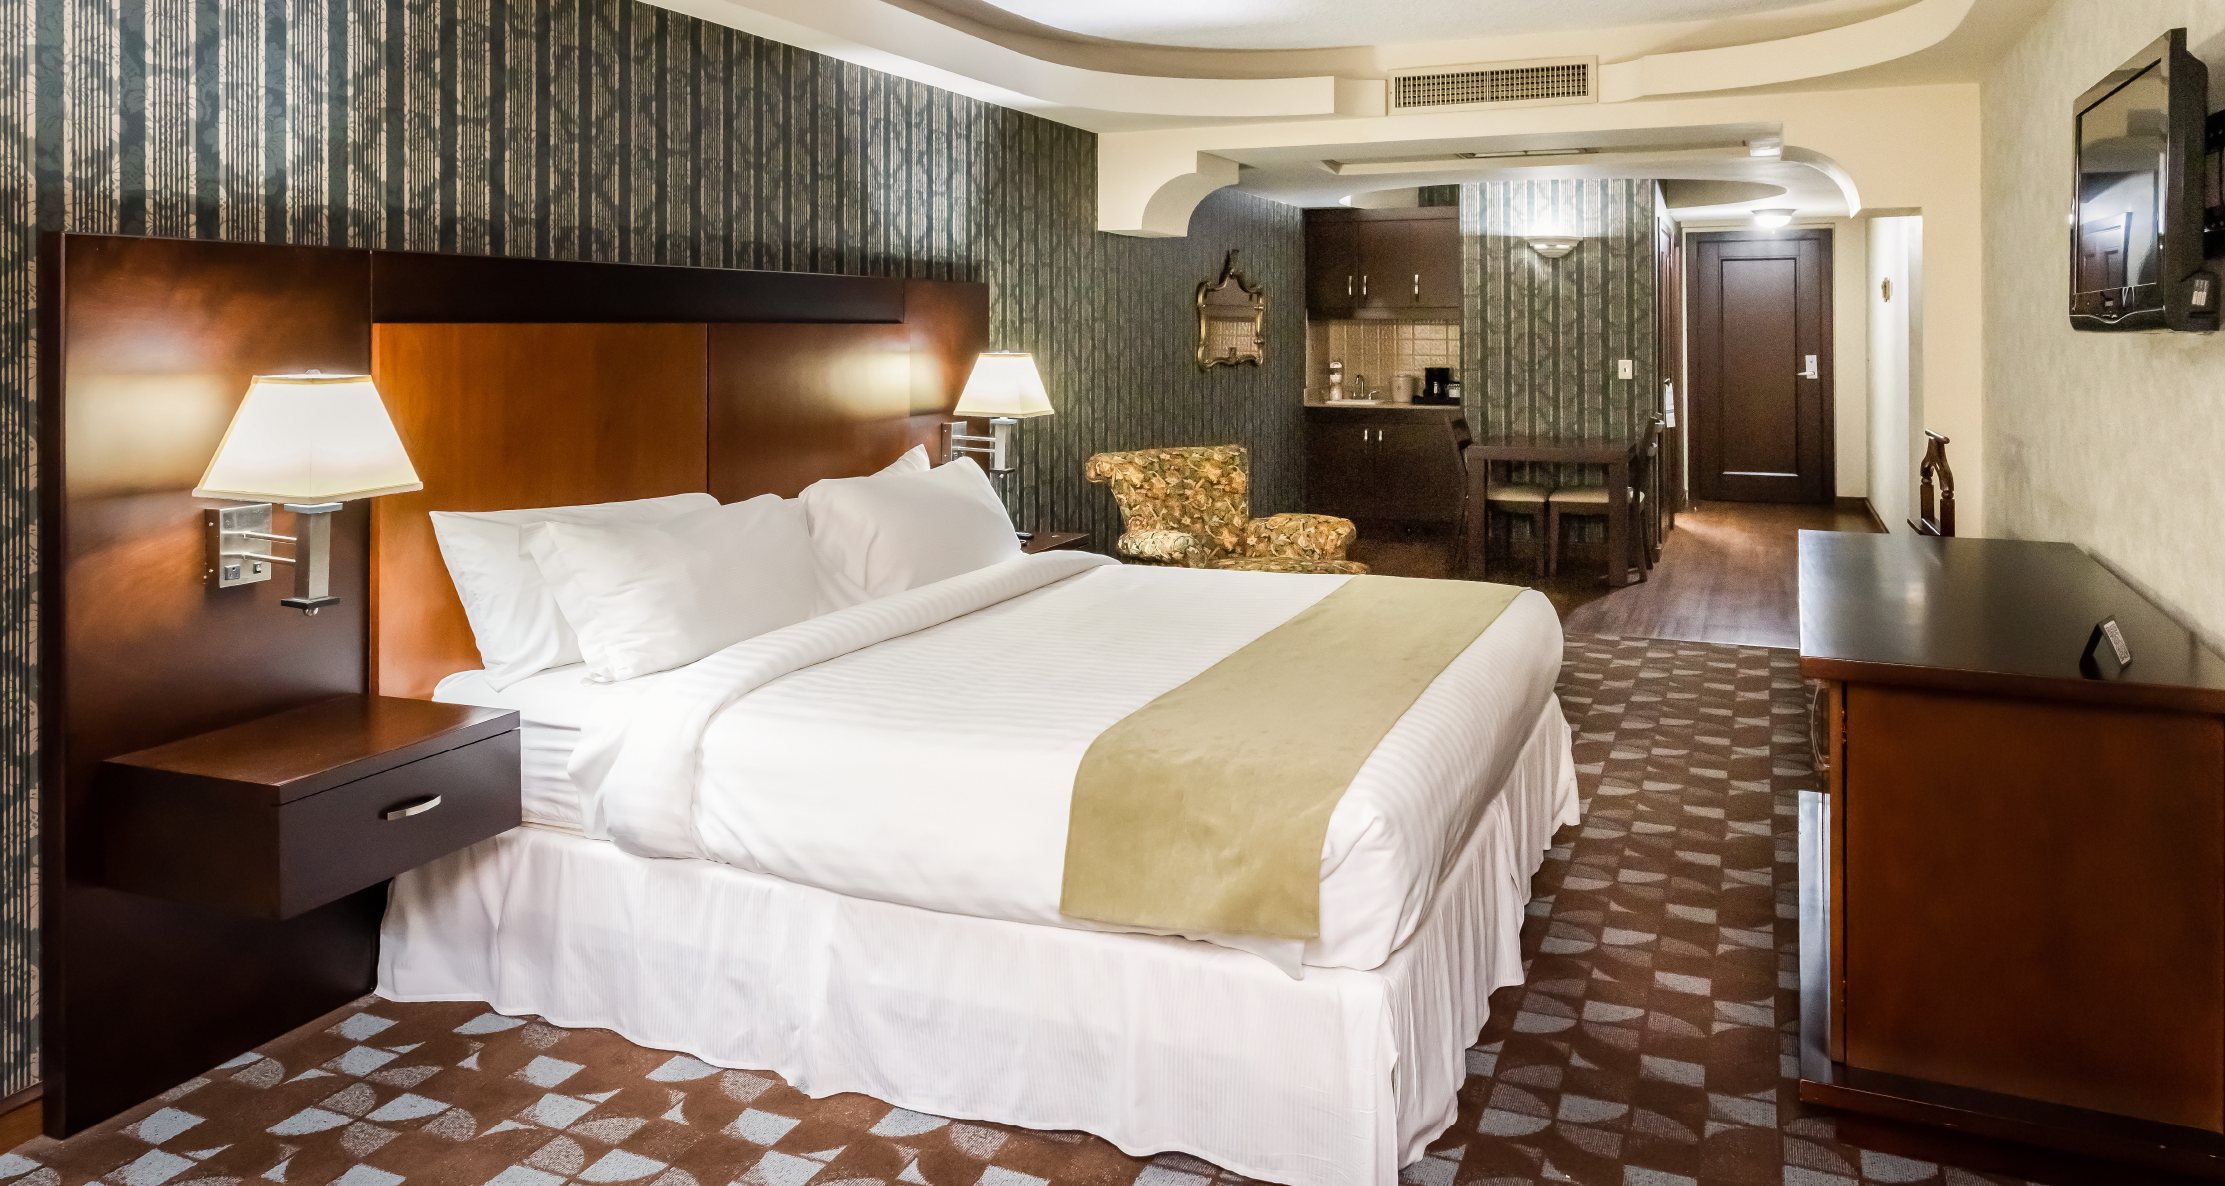  Standard Single Room - Plaza San Martin Hotel